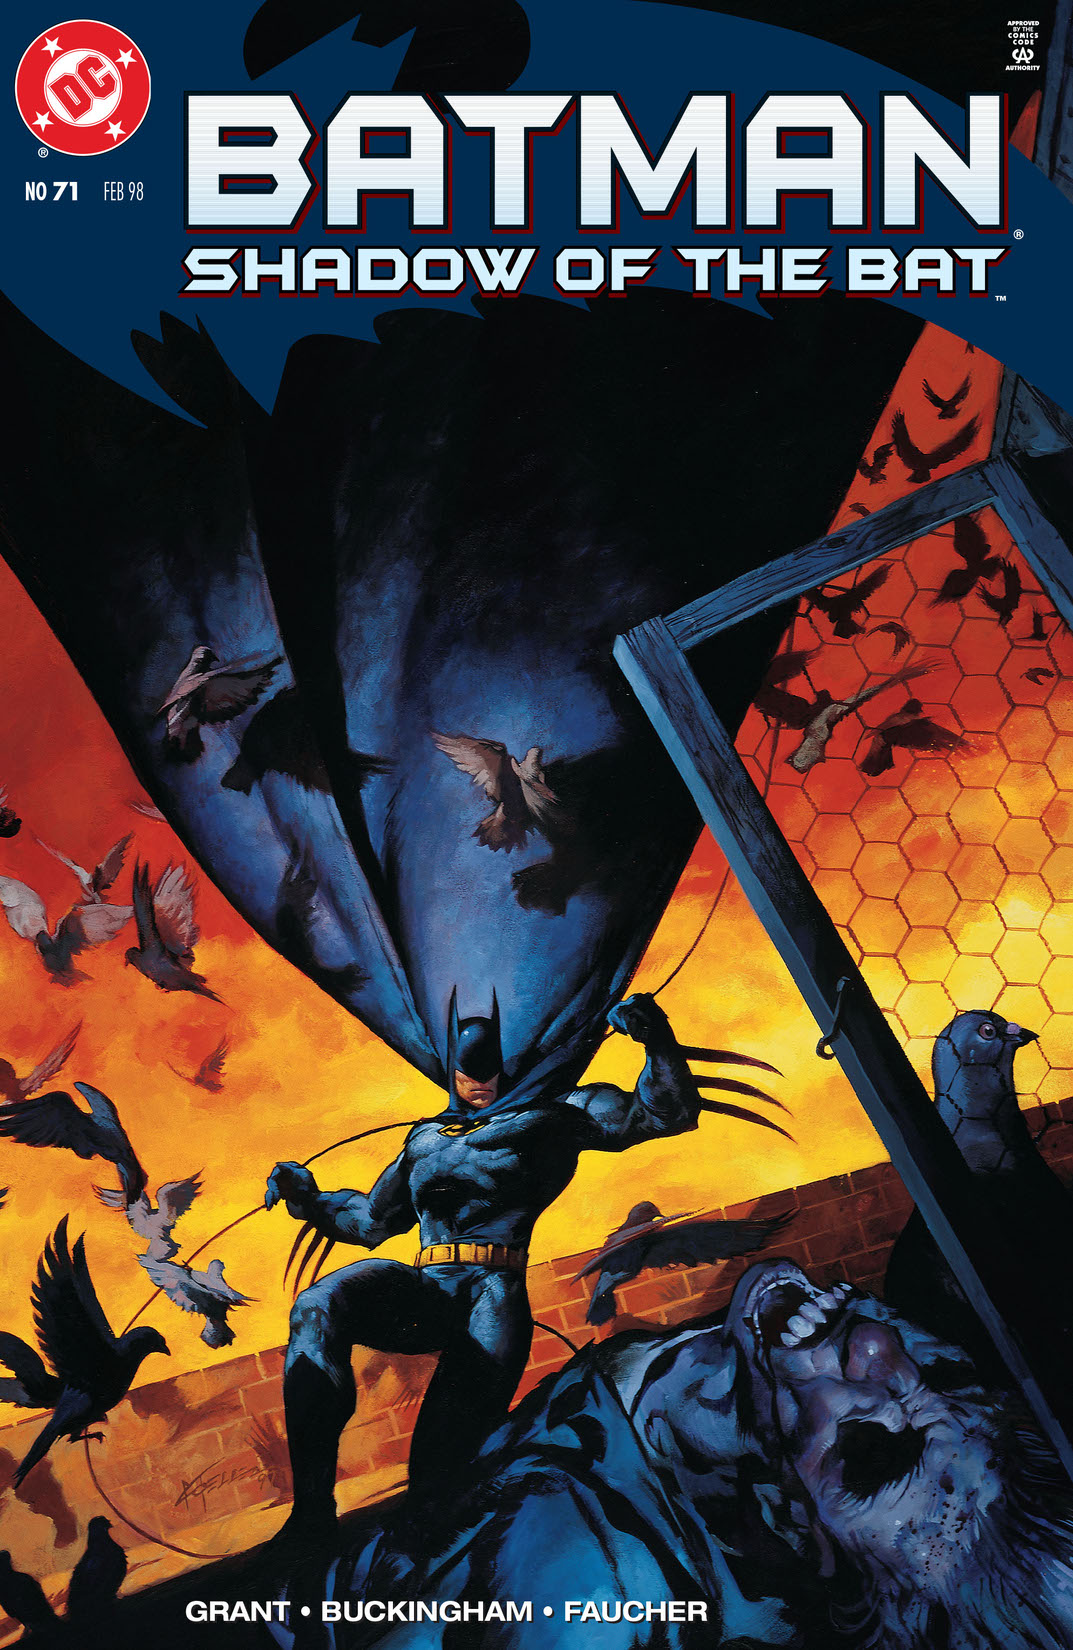 Batman: Shadow of the Bat #71 preview images